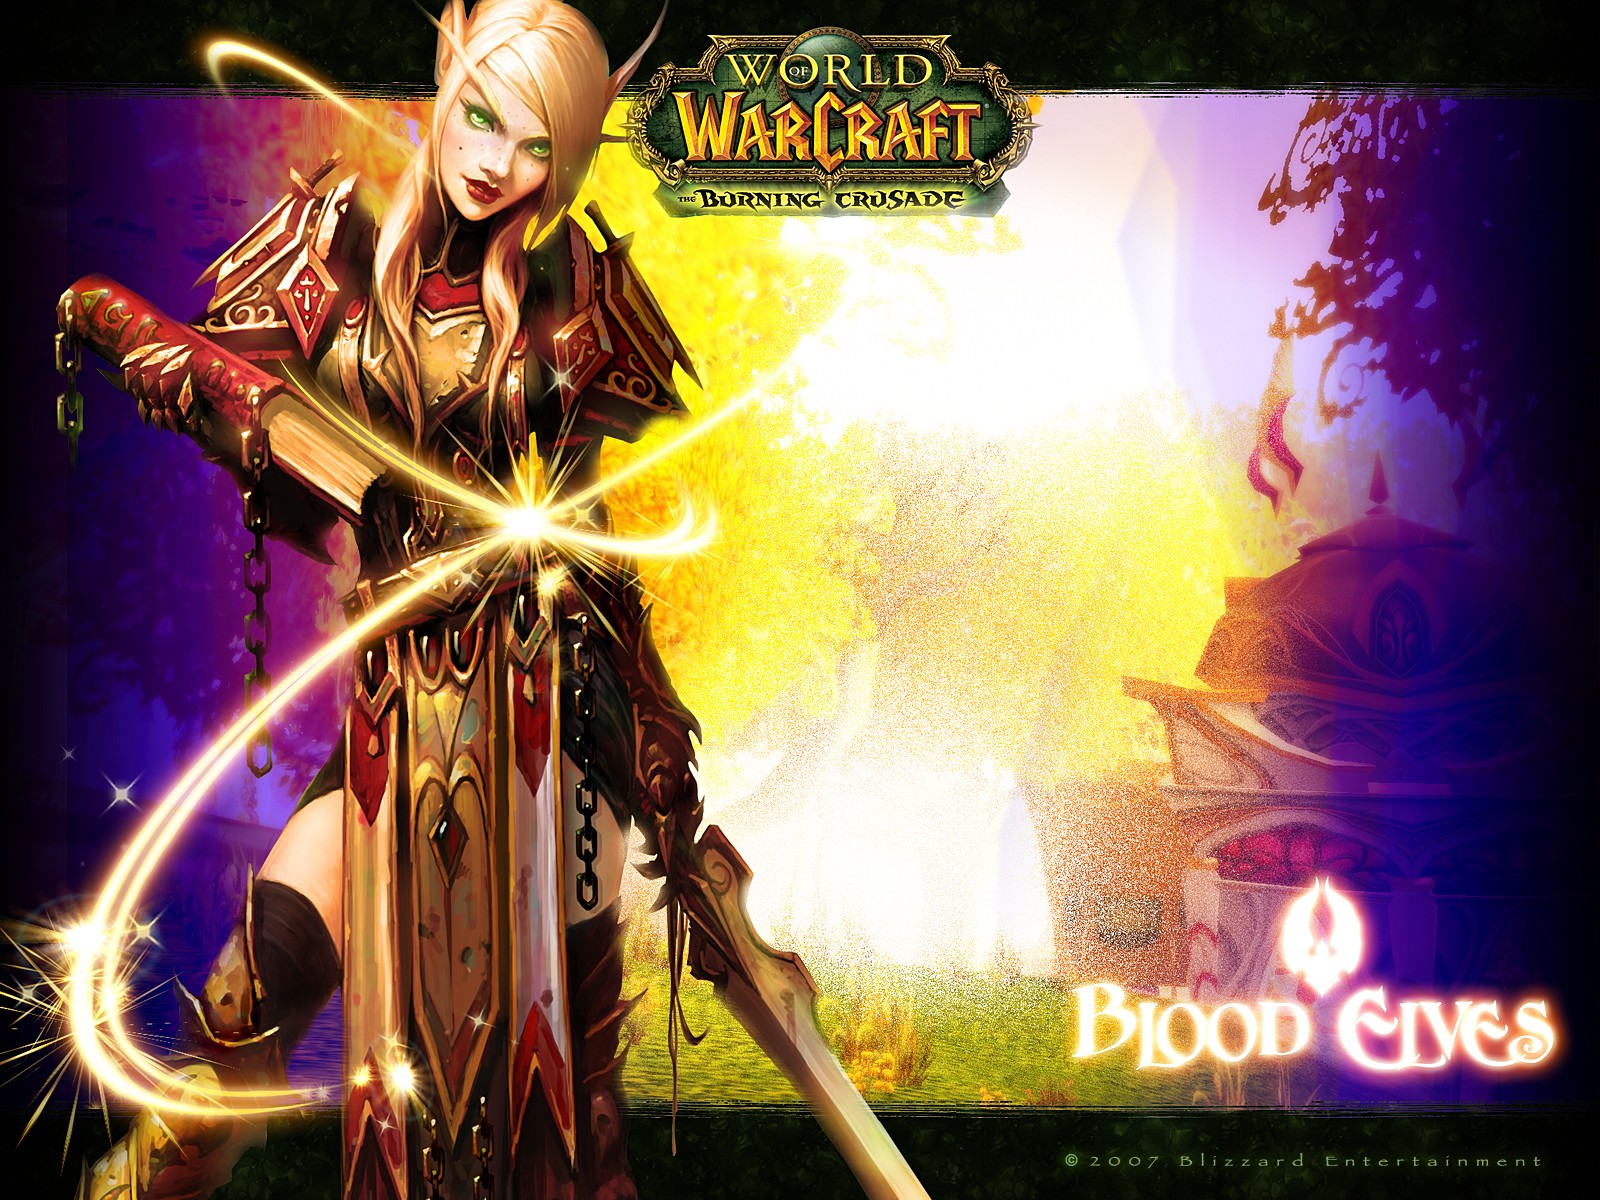 World Of Warcraft Blood Elf Paladin Games World Of Warcraft The Burning Crusade Wallpapers Hd Desktop And Mobile Backgrounds